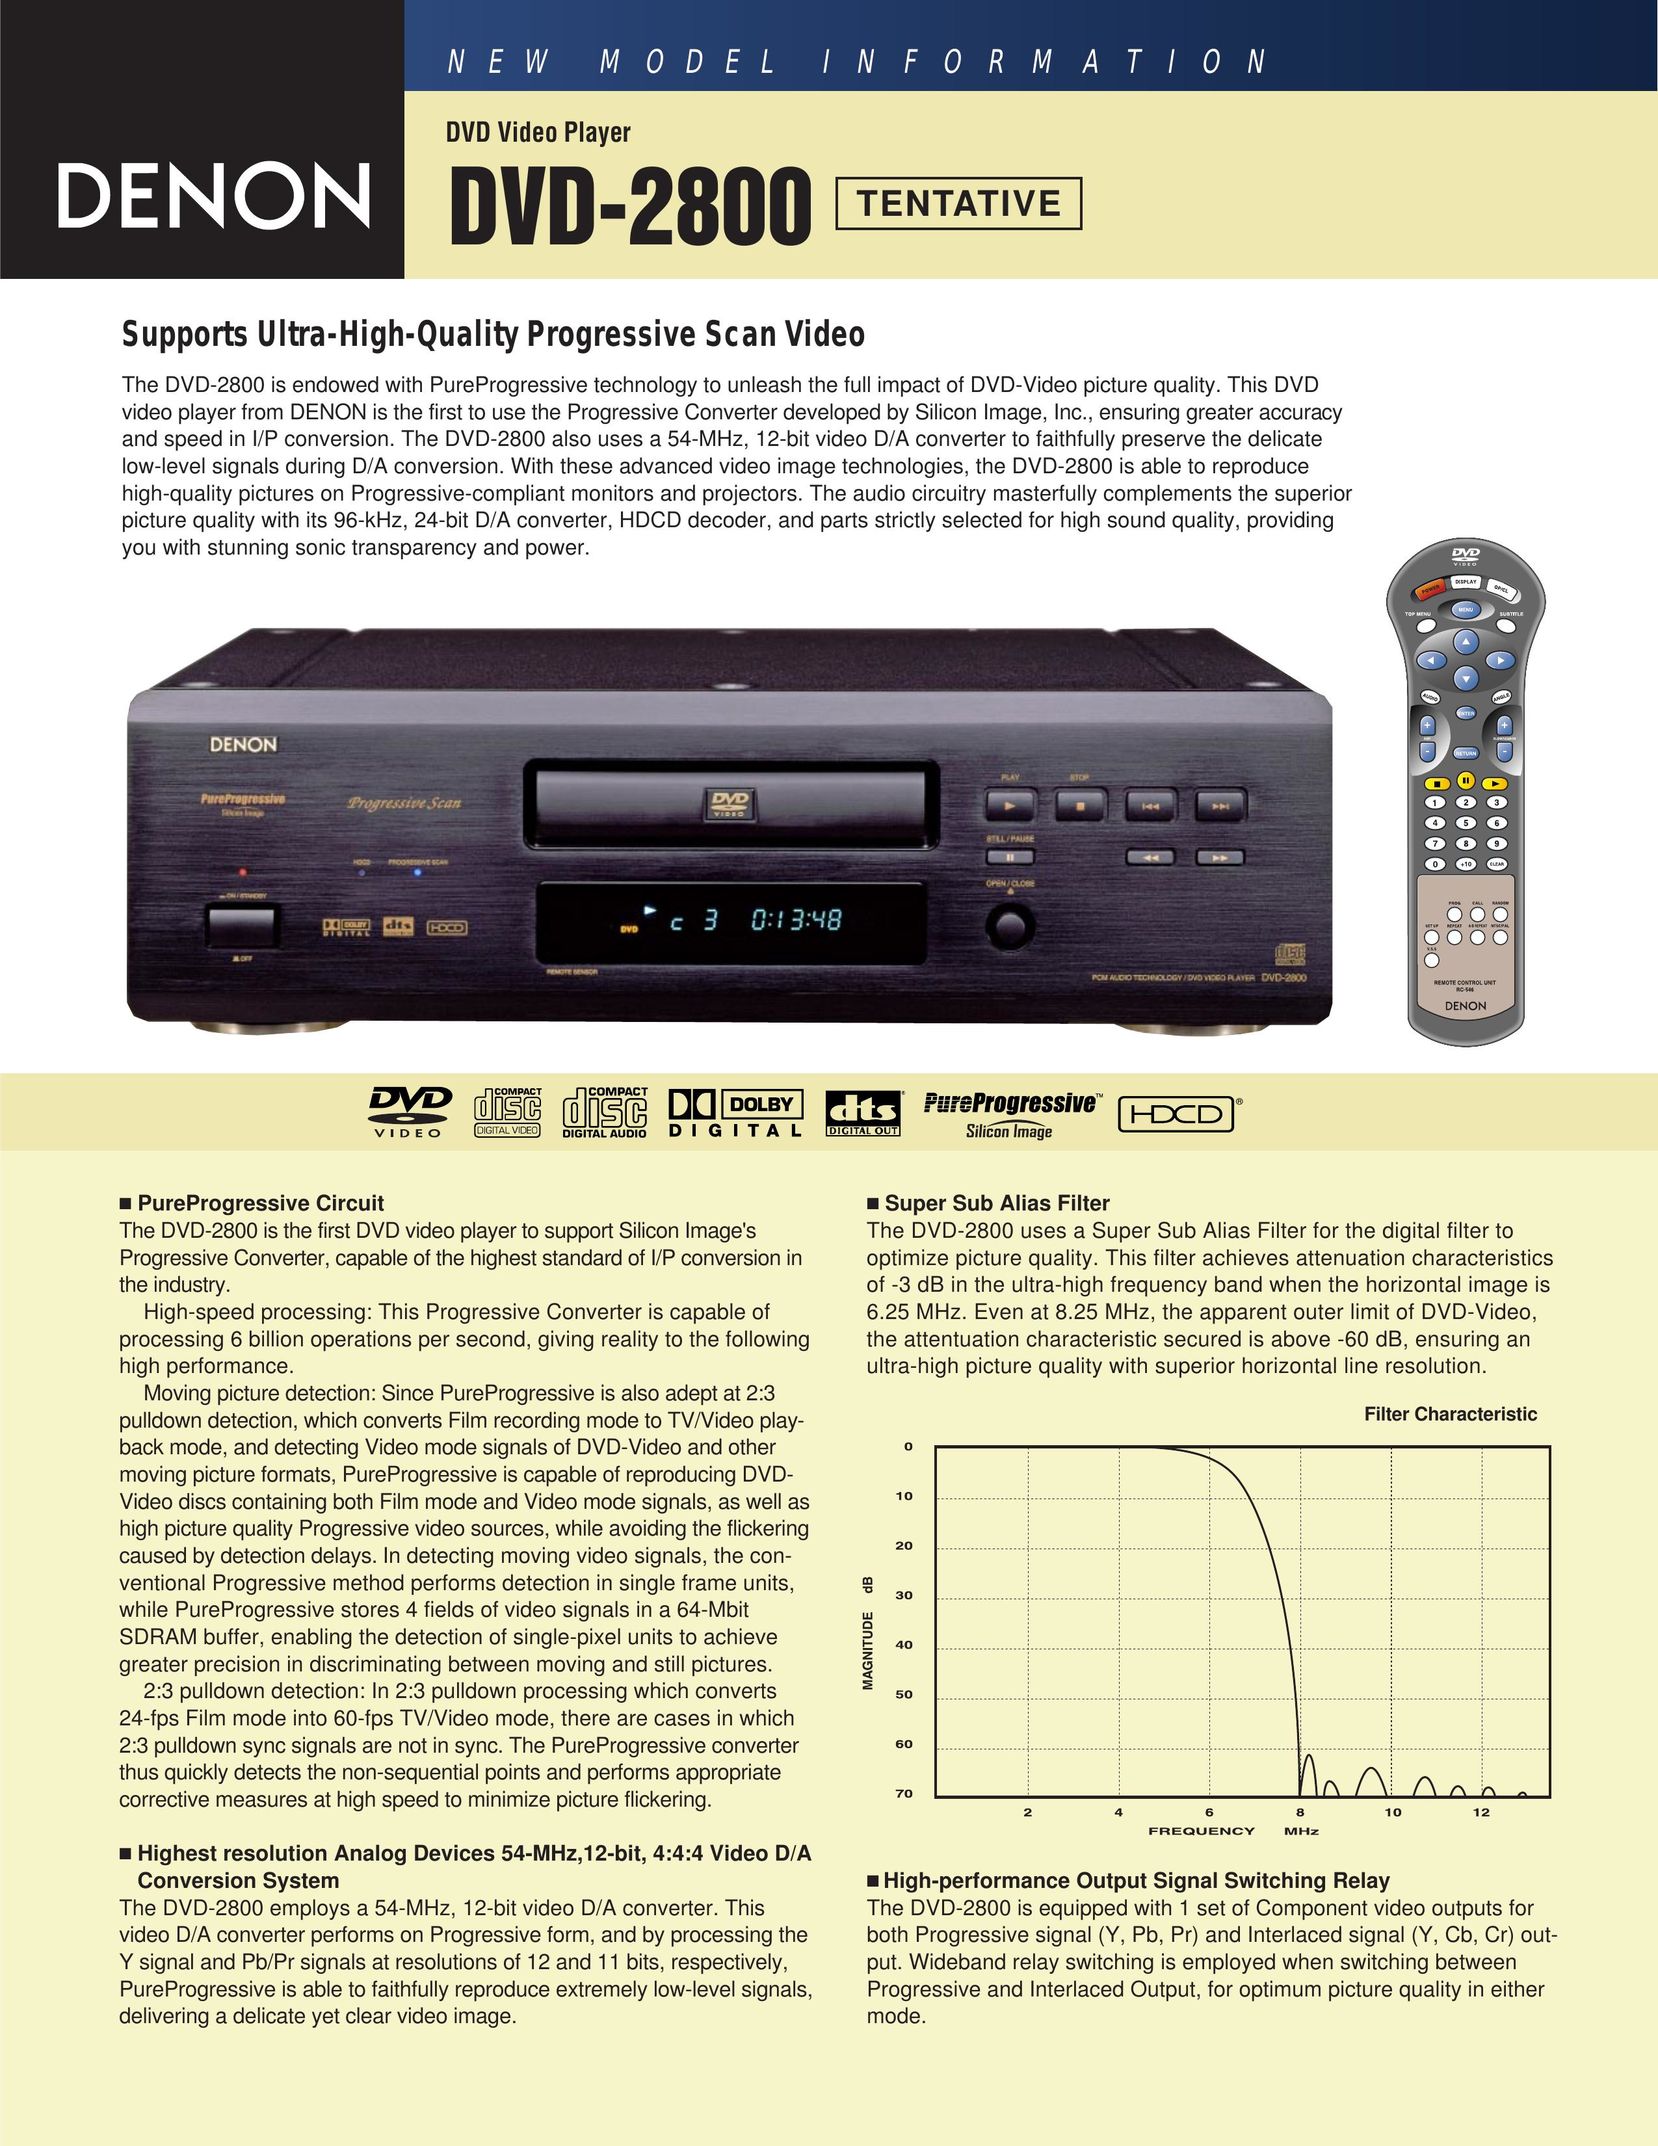 Denon DVD-2800 DVD Player User Manual